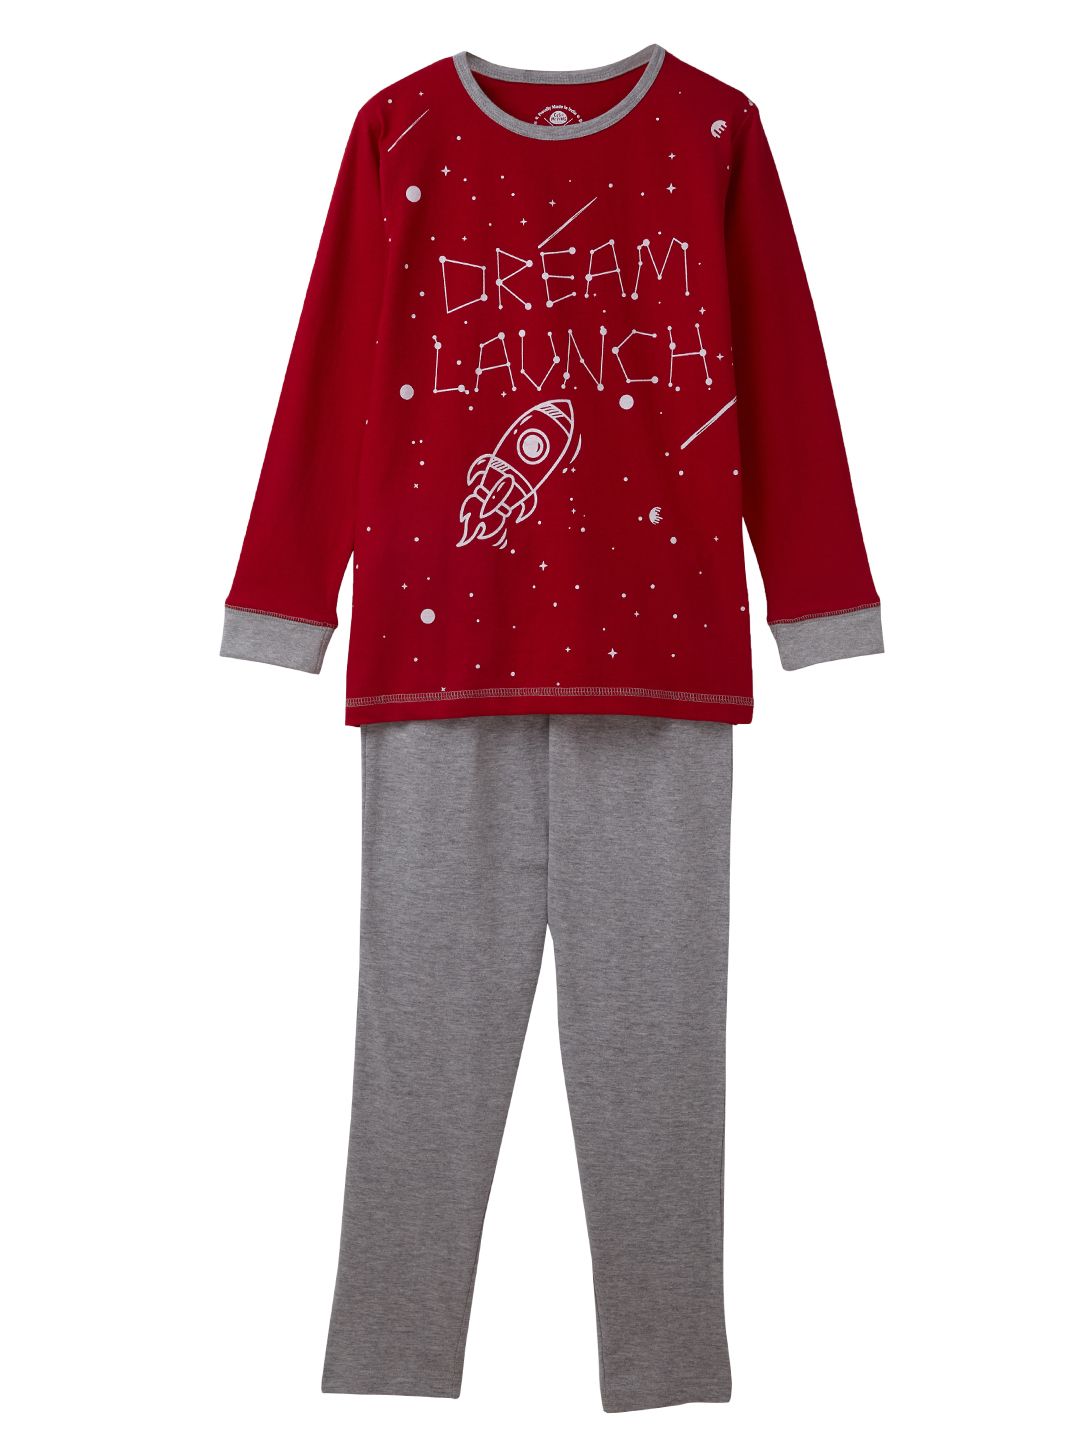 Boys Sleepwear Set - Red full sleeve tee with Dream launch print and contrast pyjama (EOSS)